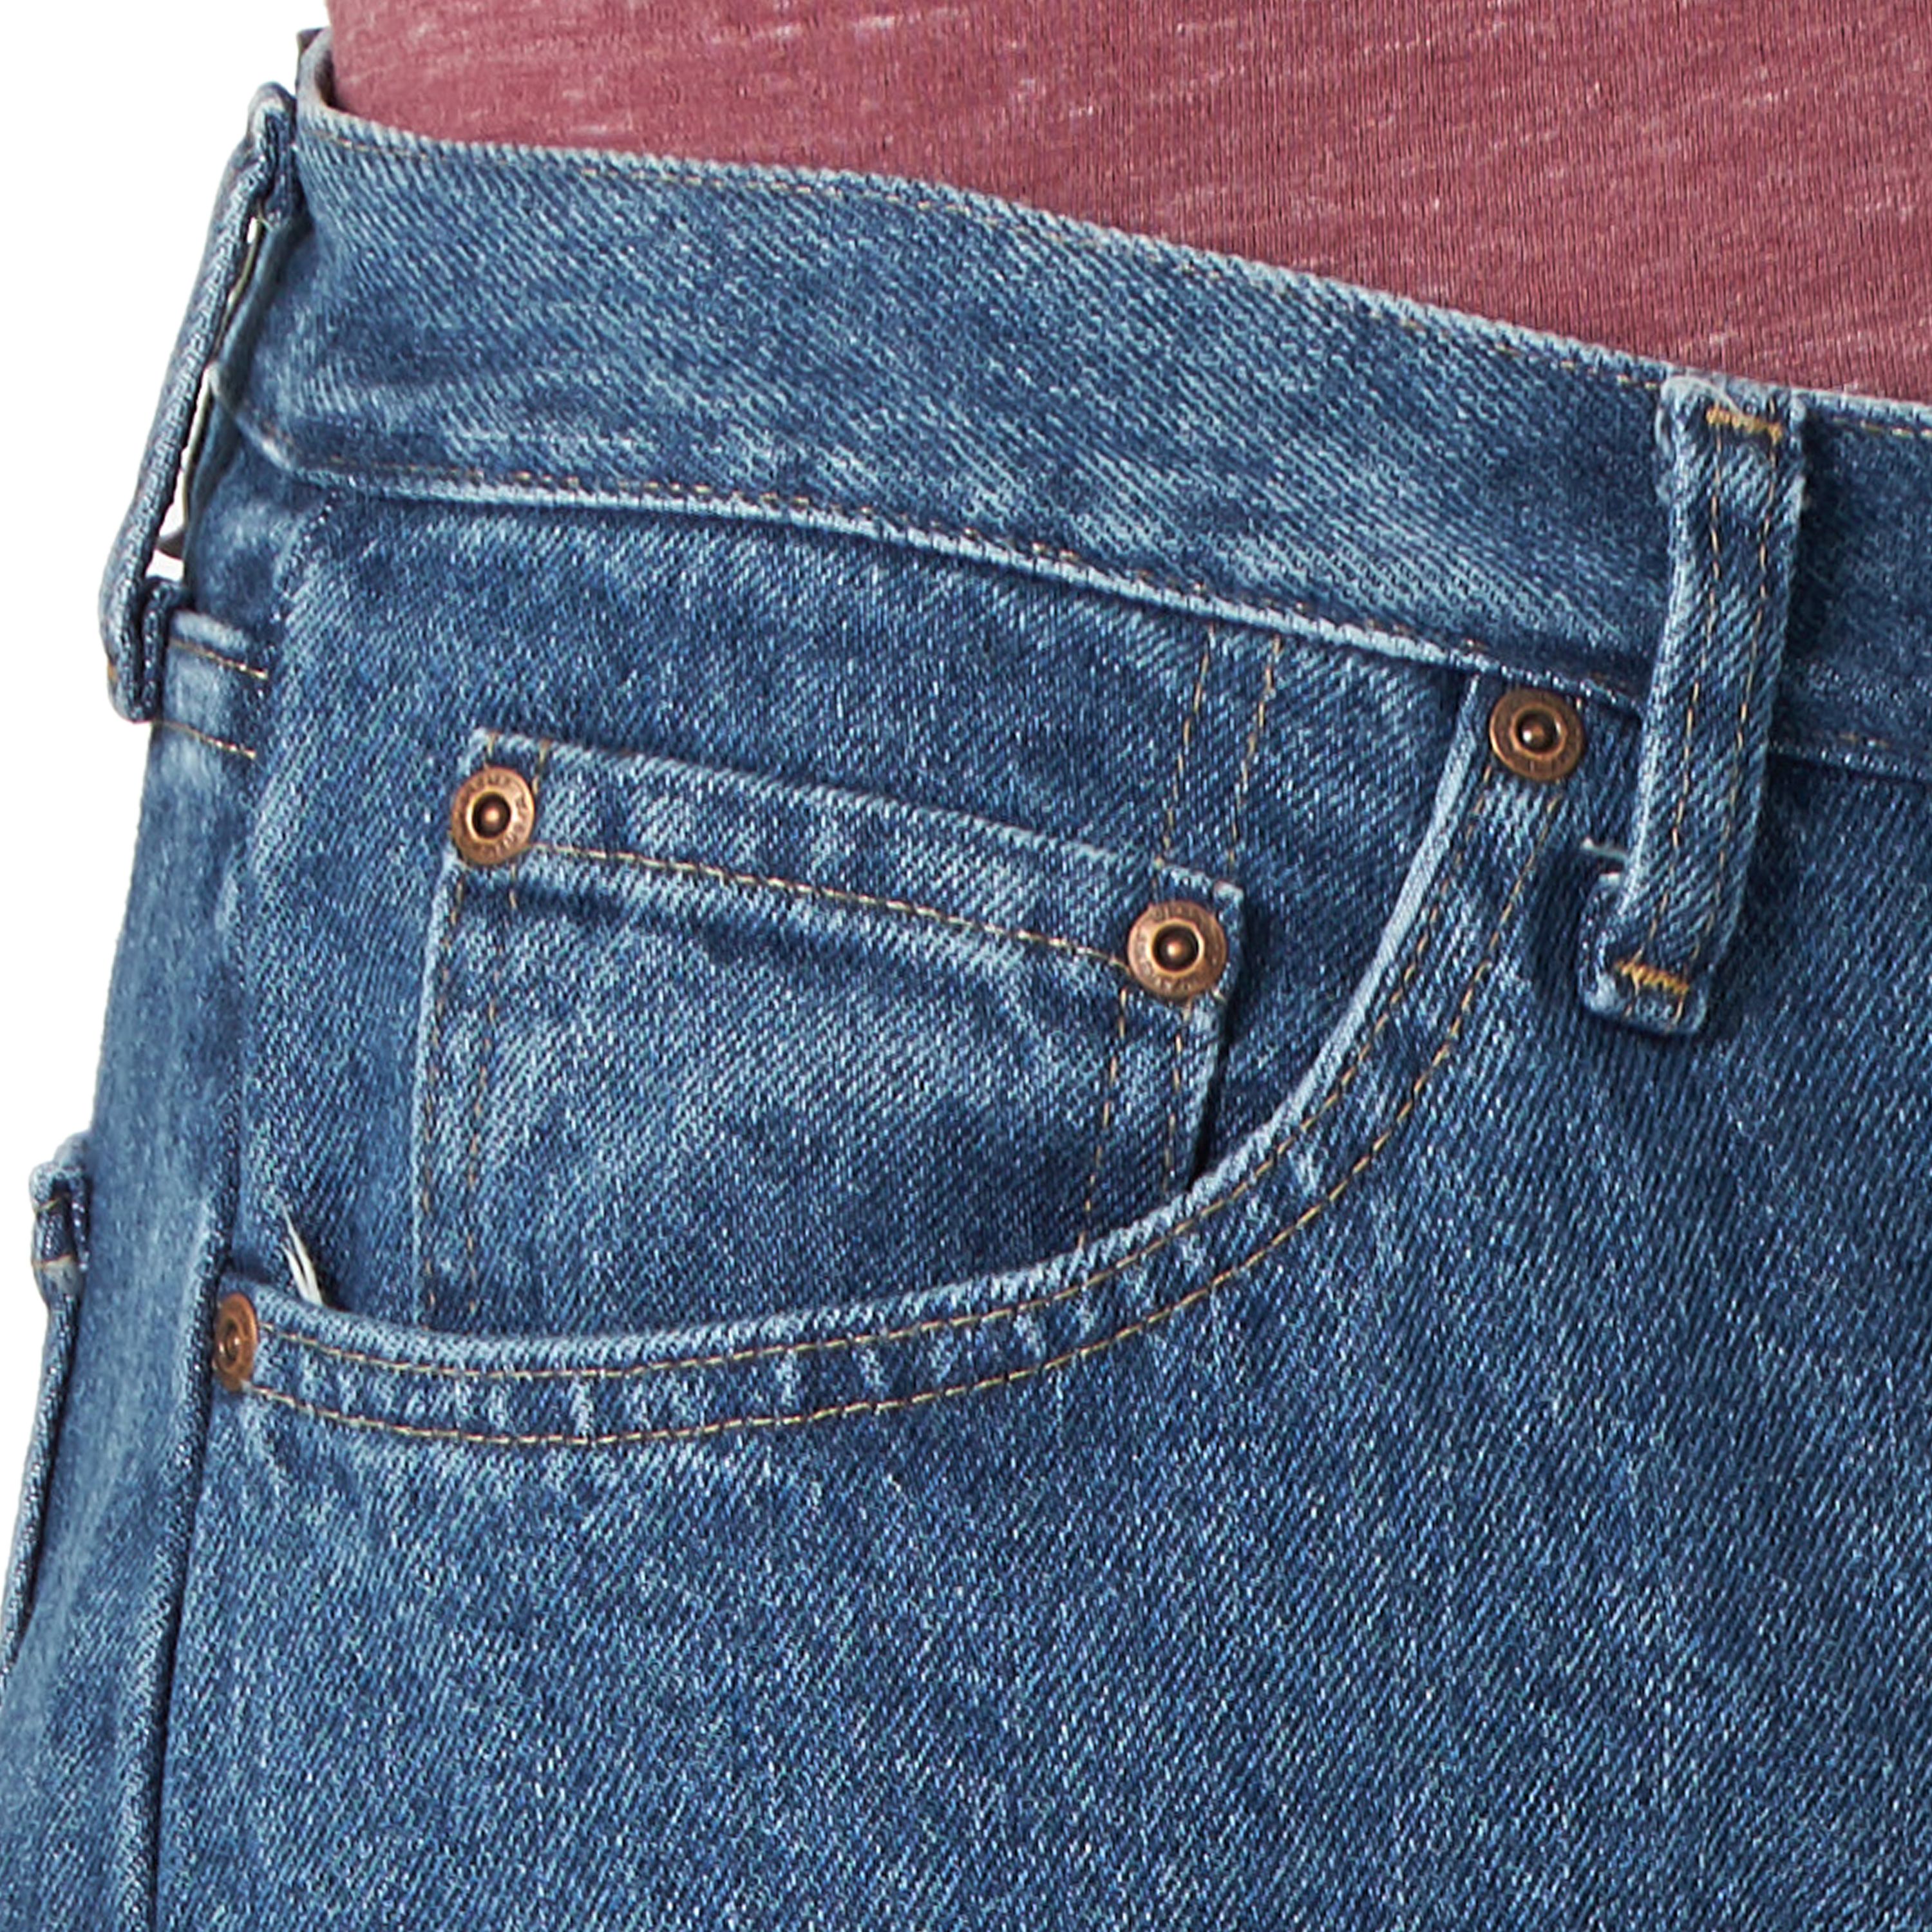 Wrangler Men's and Big Men's Regular Fit Jeans - image 5 of 5